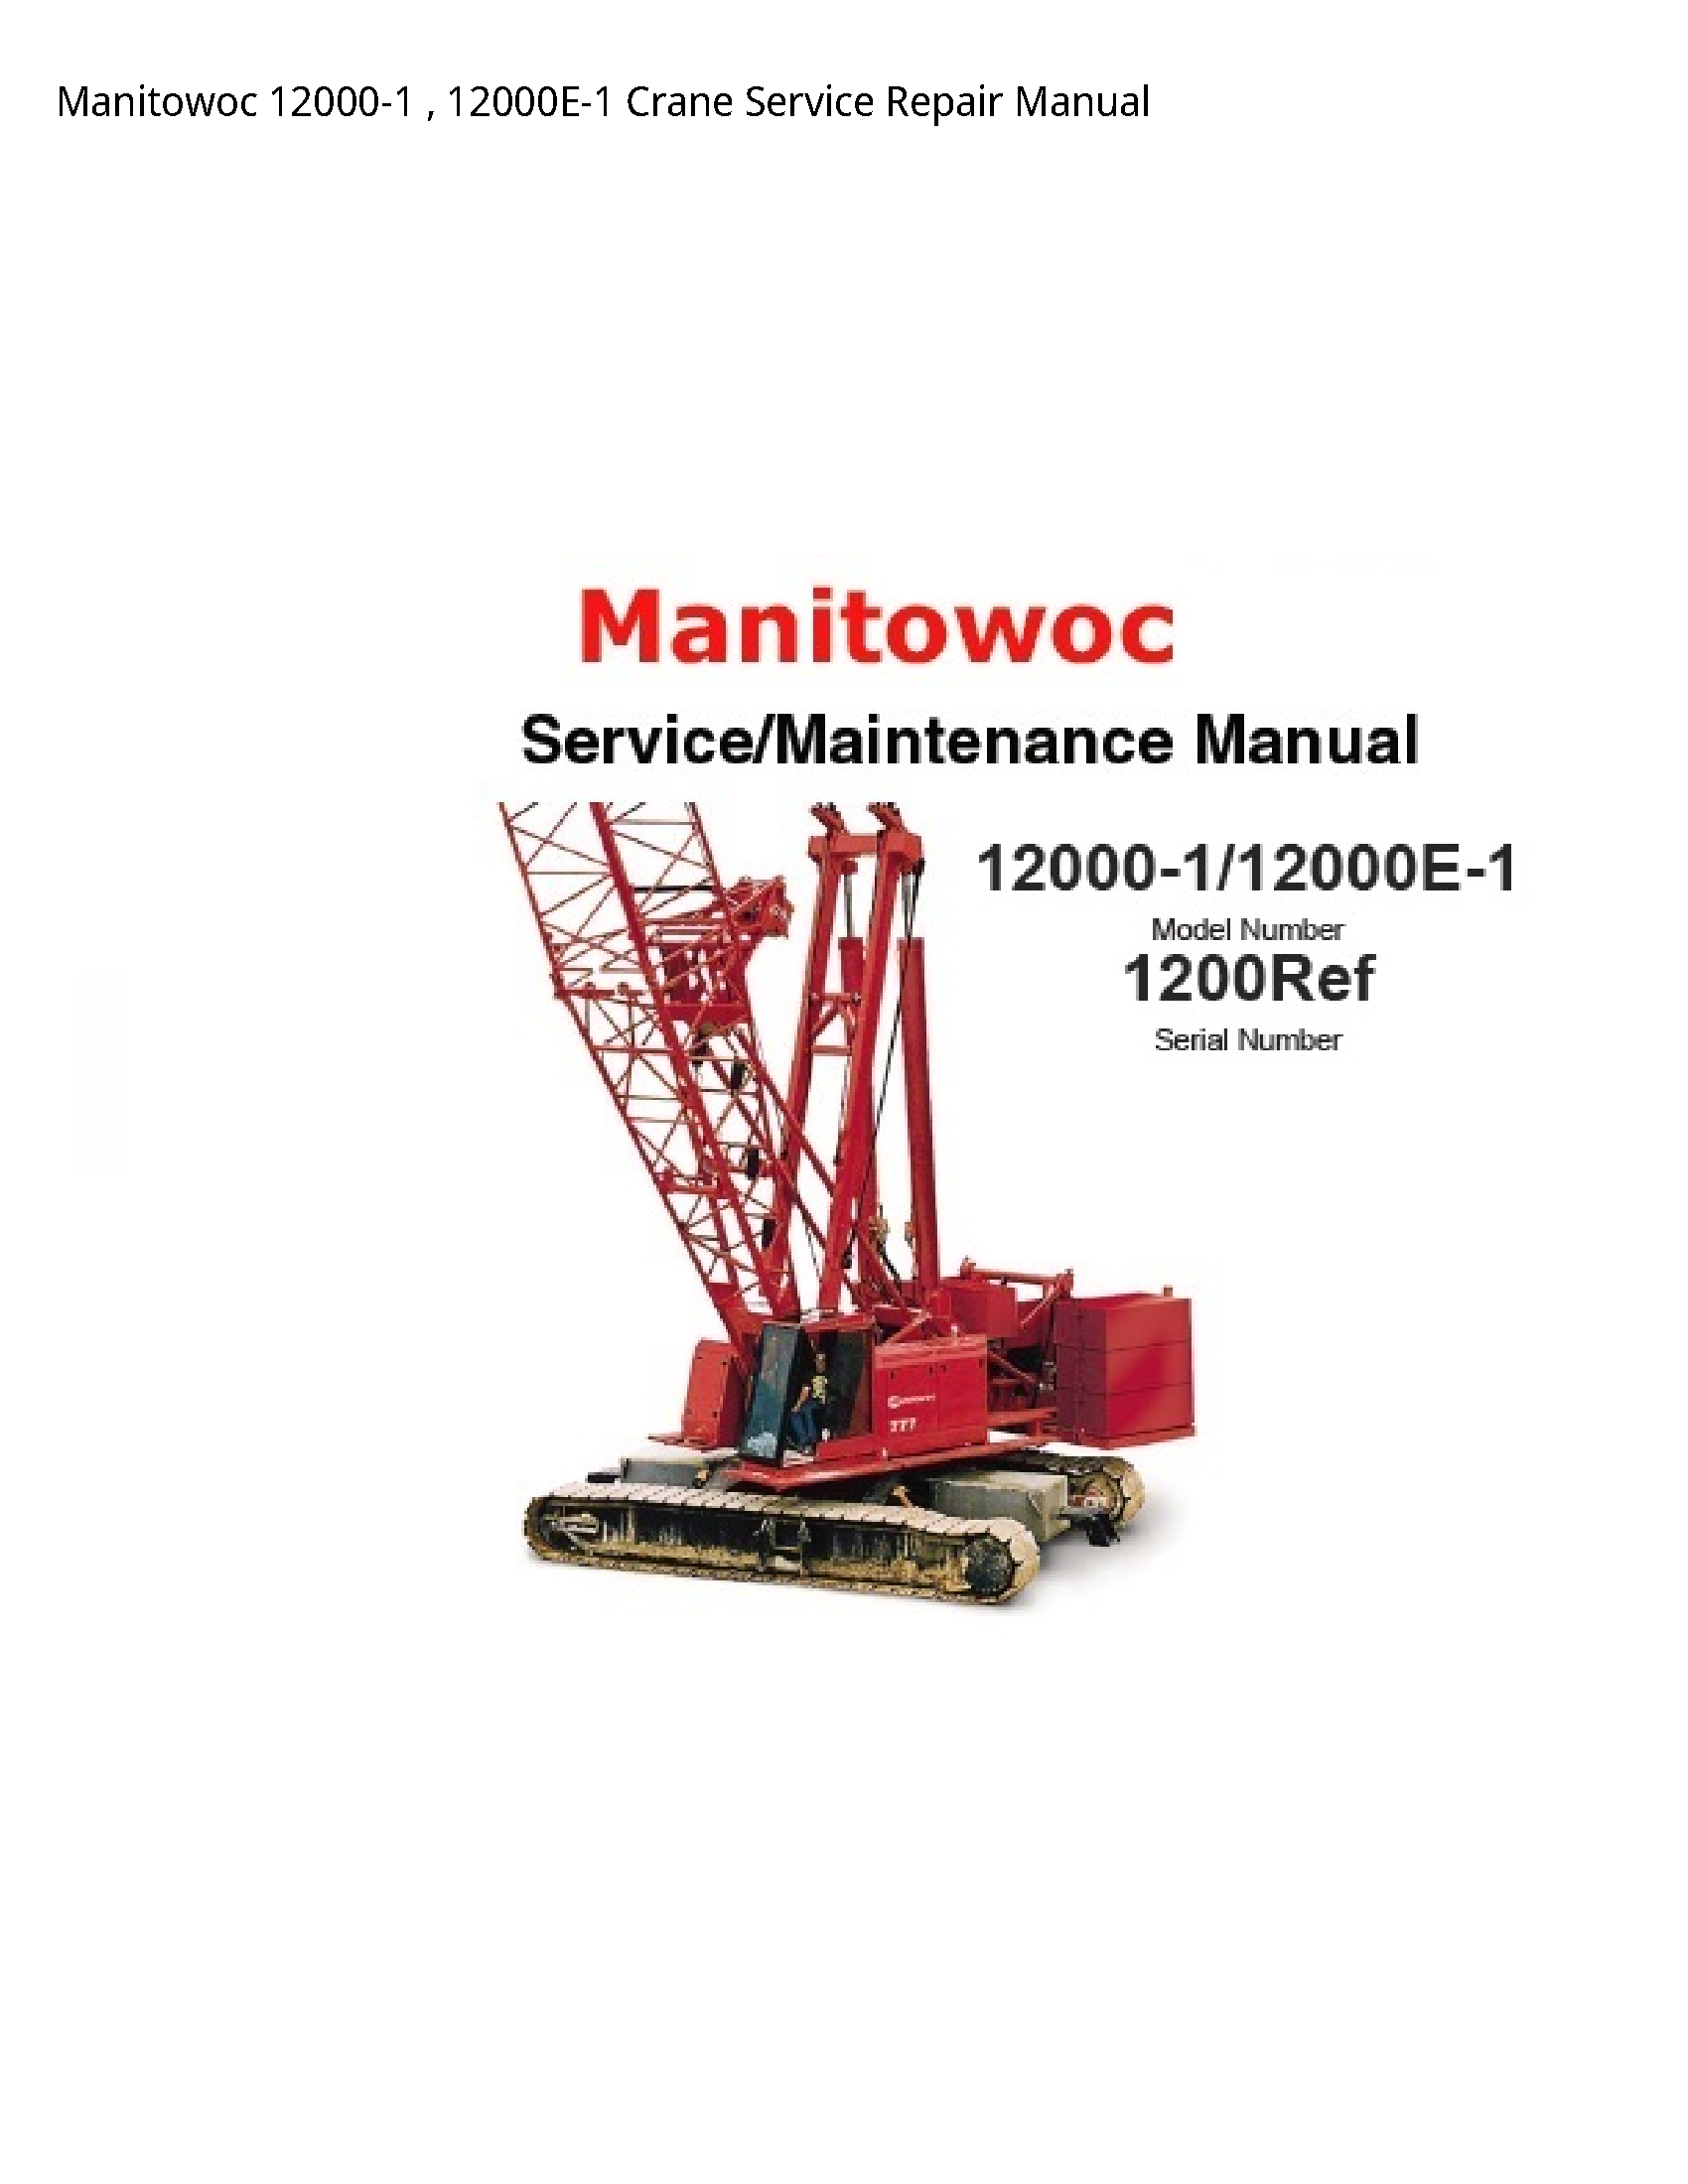 Manitowoc 12000-1 Crane manual